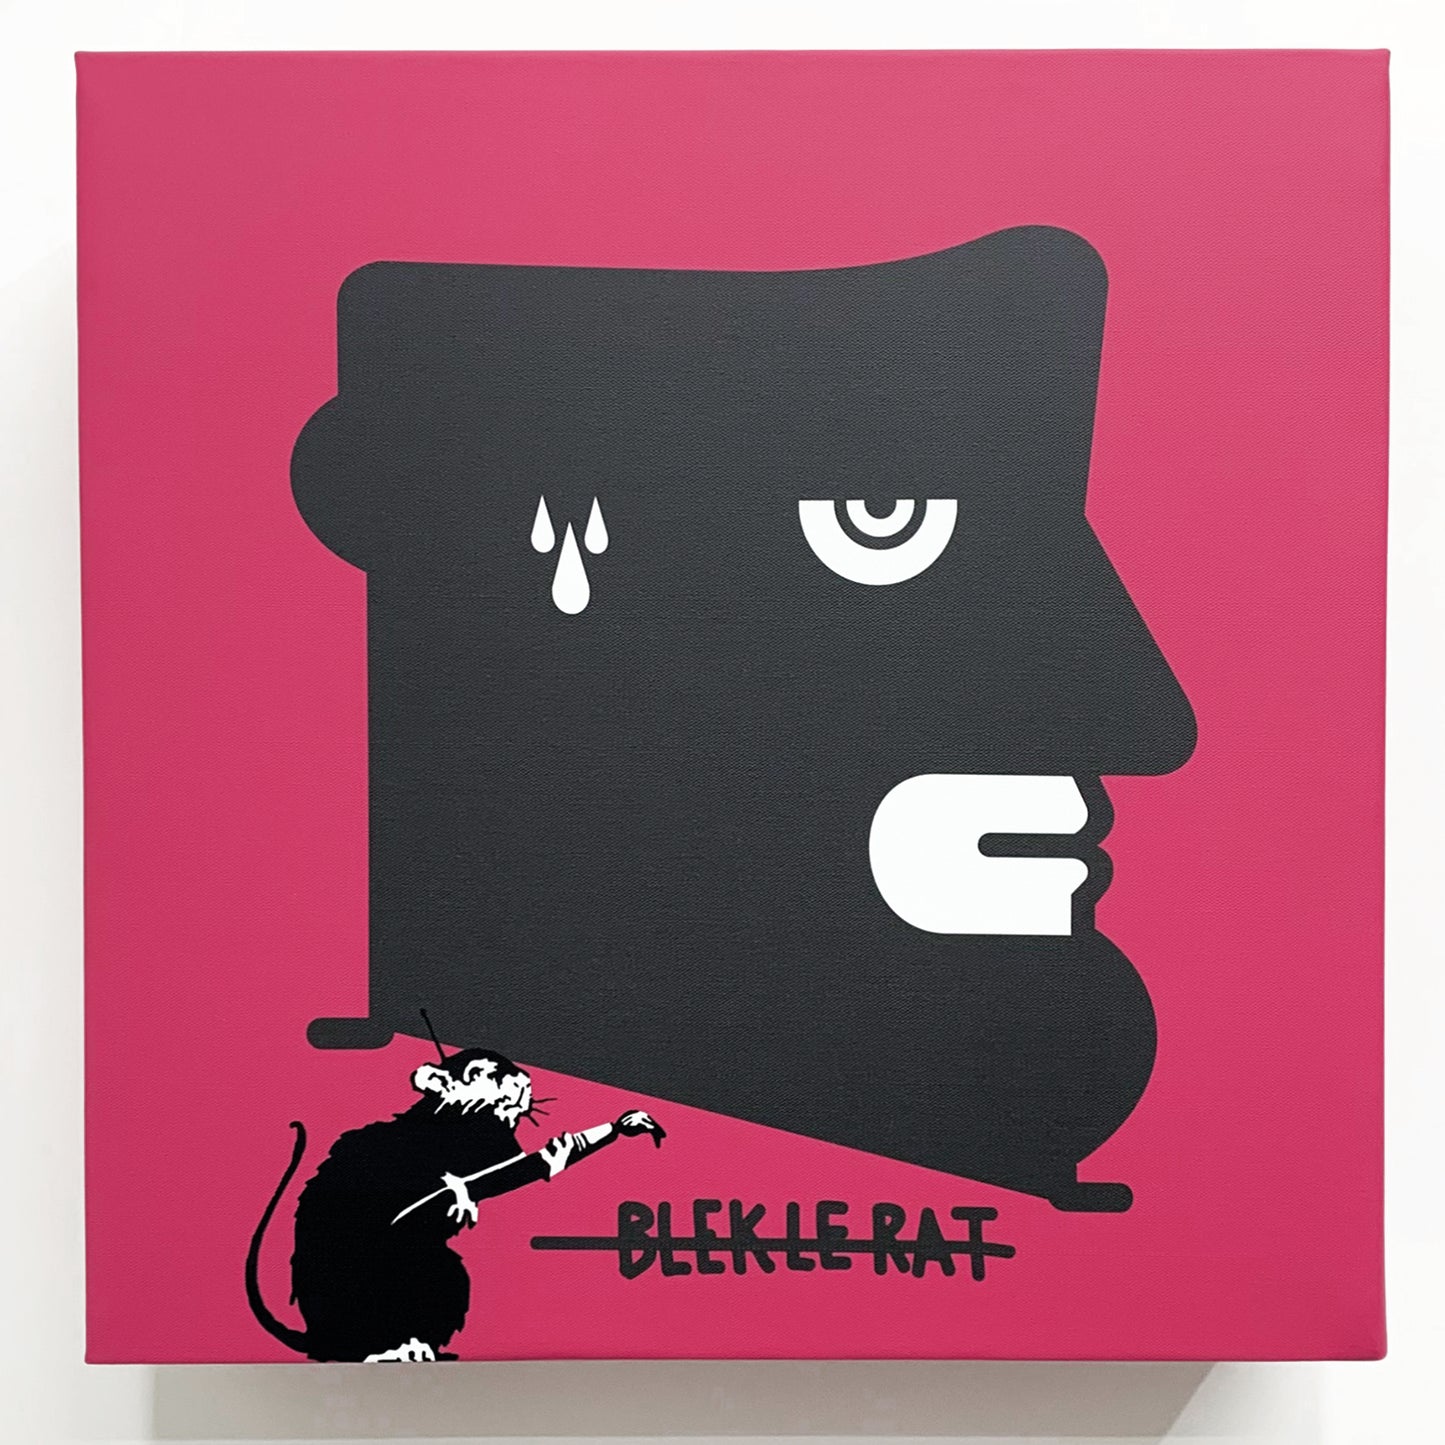 Street War (Banksy VS. Blek Le rat